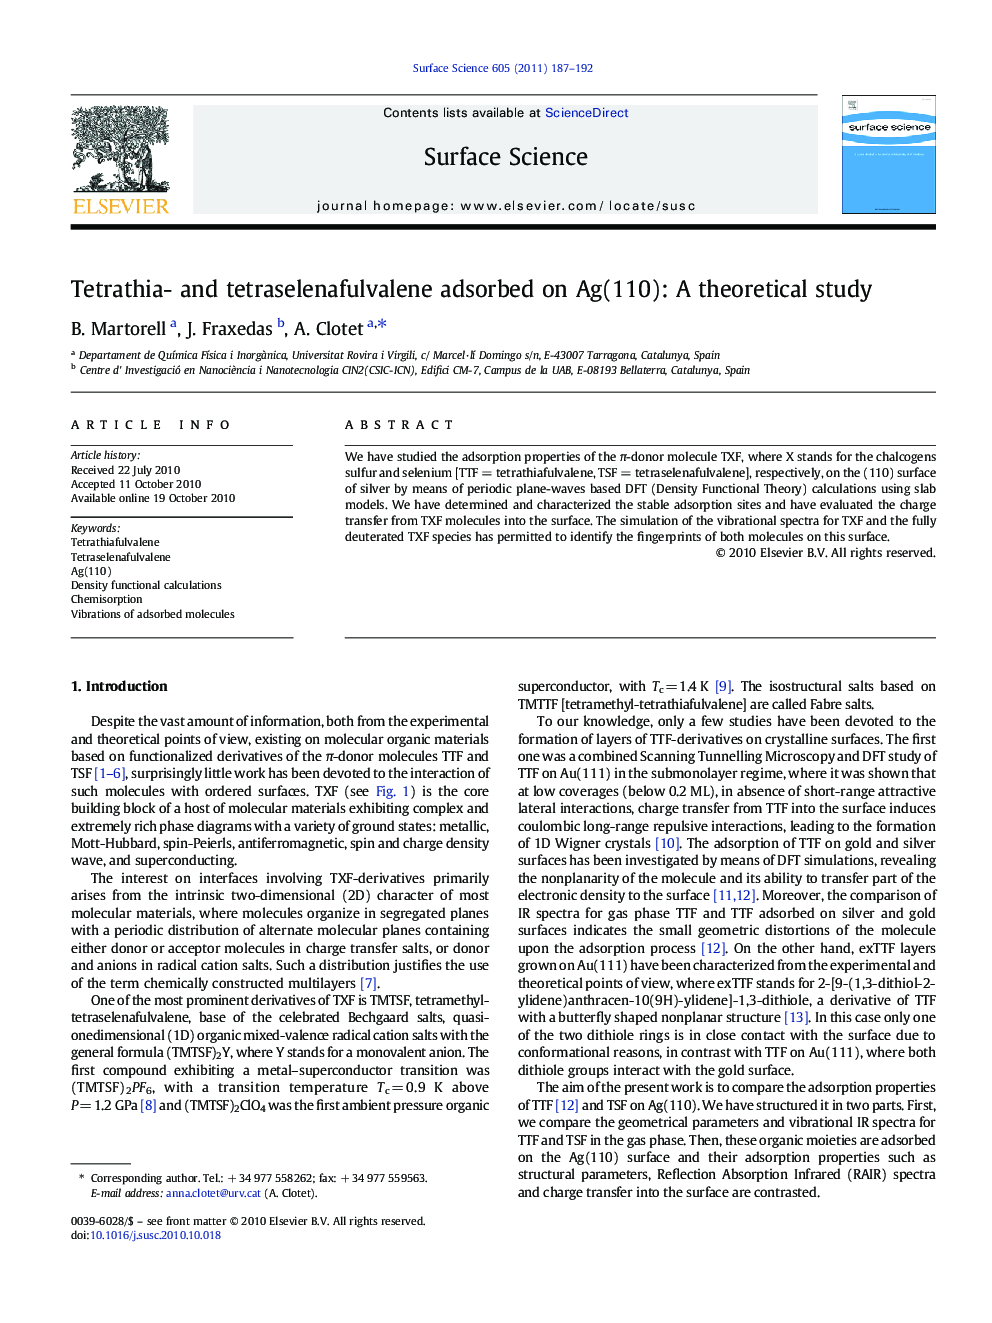 Tetrathia- and tetraselenafulvalene adsorbed on Ag(110): A theoretical study